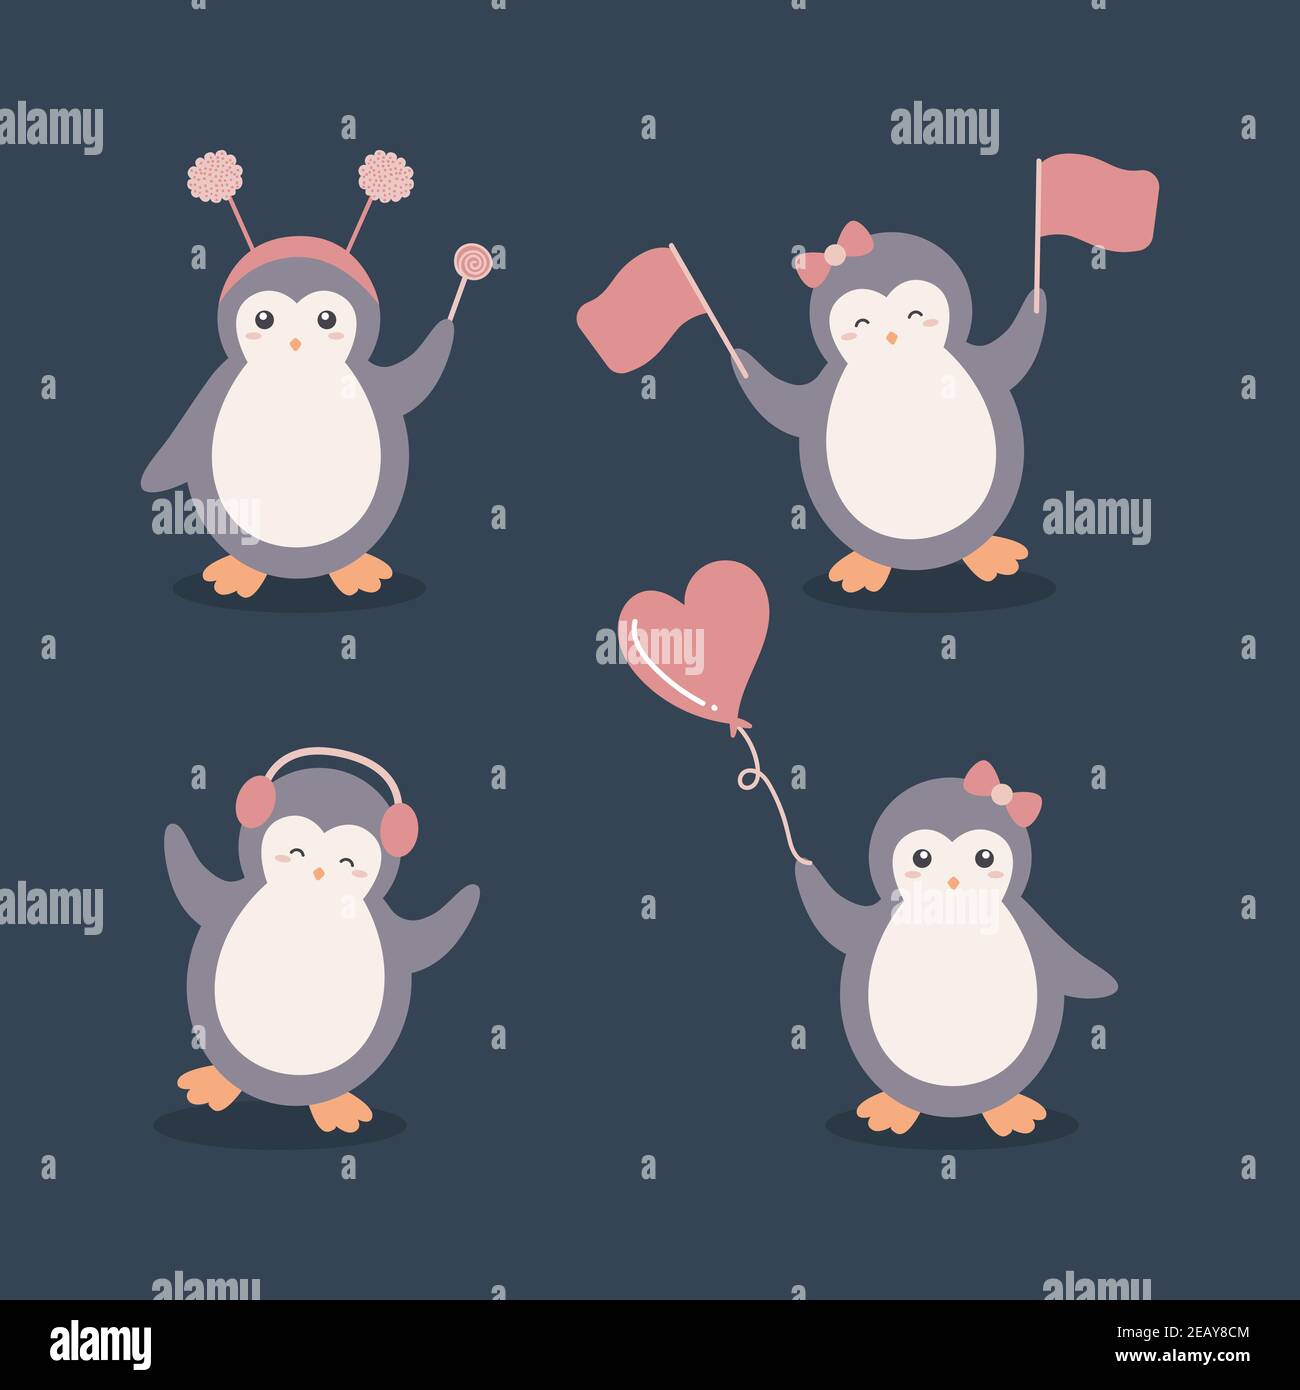 Cute Penguin Playing Various Poses Cartoon Character Set Stock Vector